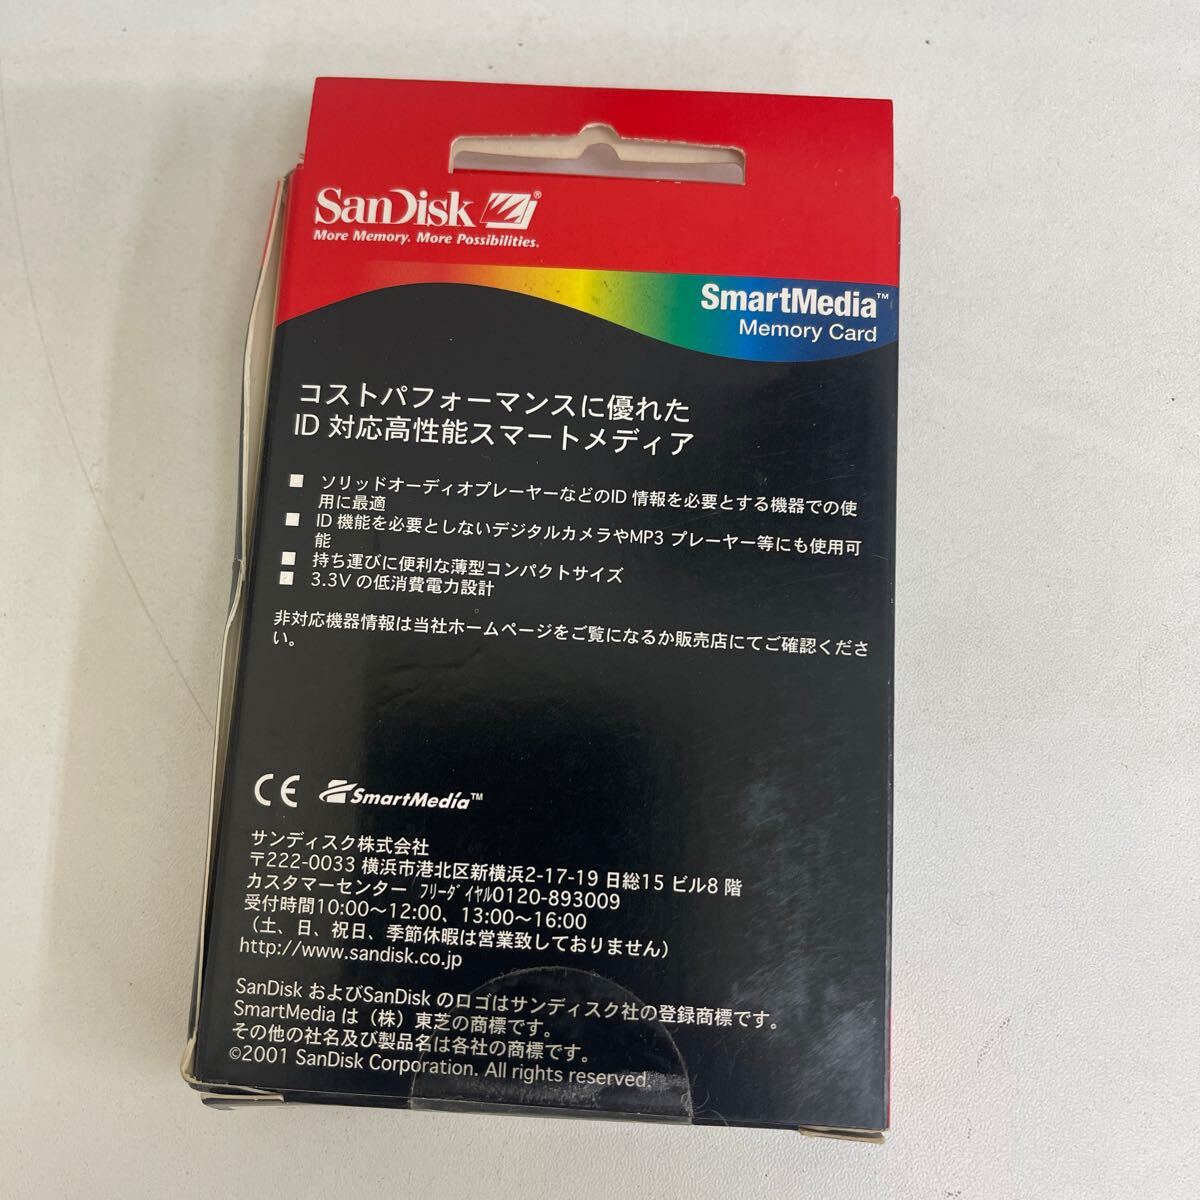 Y405. 38. Sandisk Smartmedia 128.MB memory card Smart Media unused storage goods box becoming useless equipped 